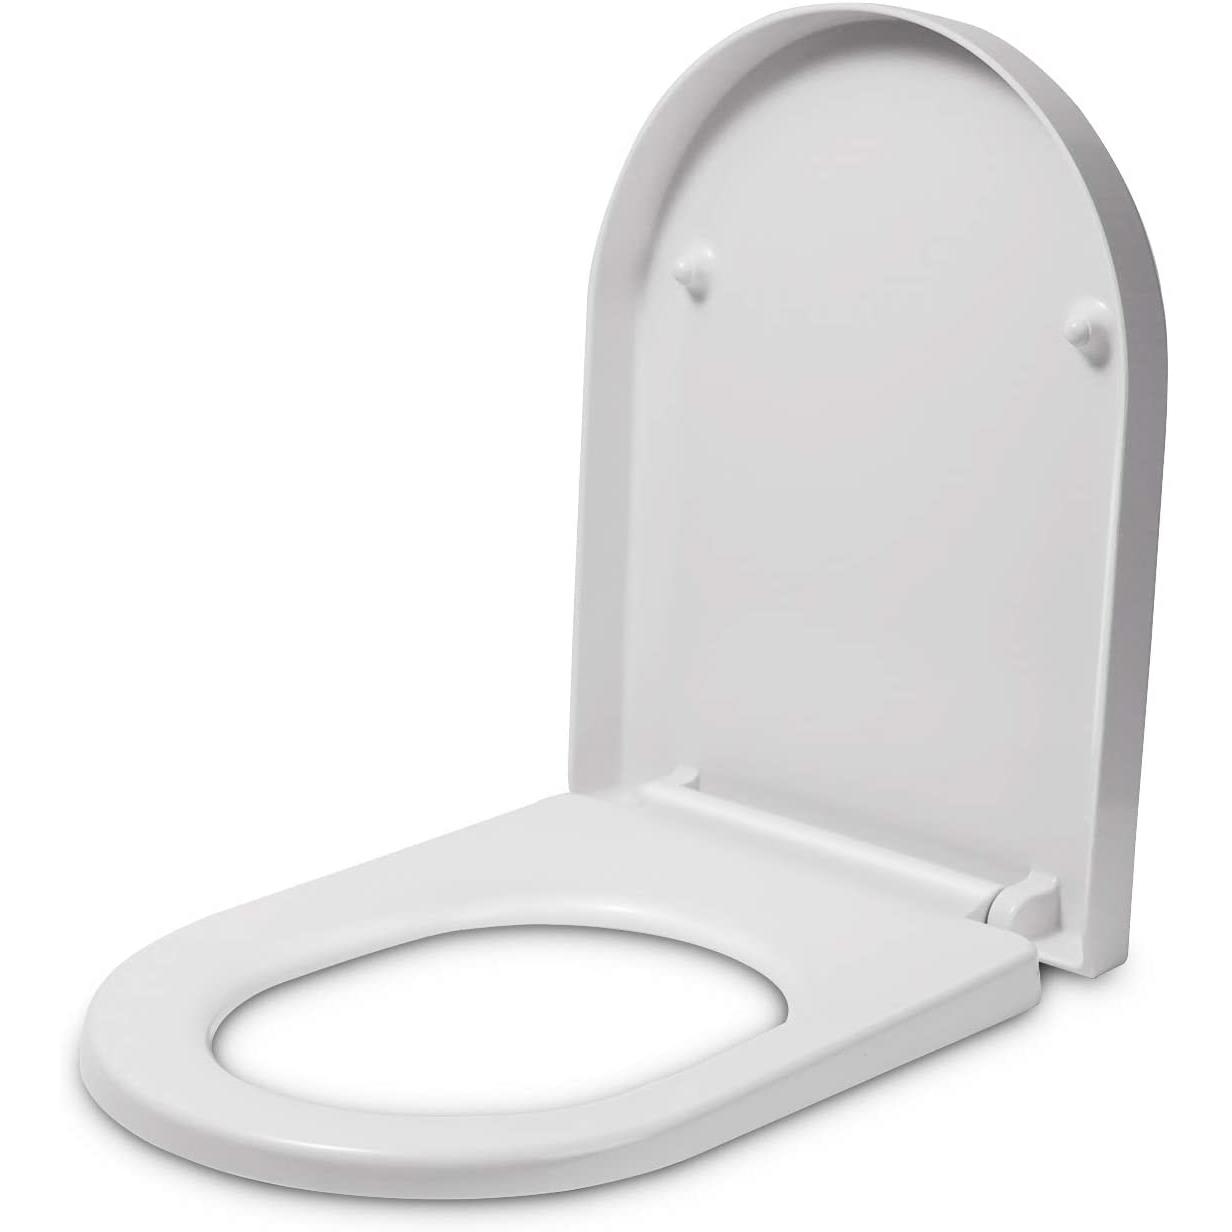 Furnilux - WC Bril - Toiletbril - Quick-Release Functie kopen? Shop bij fonQ!